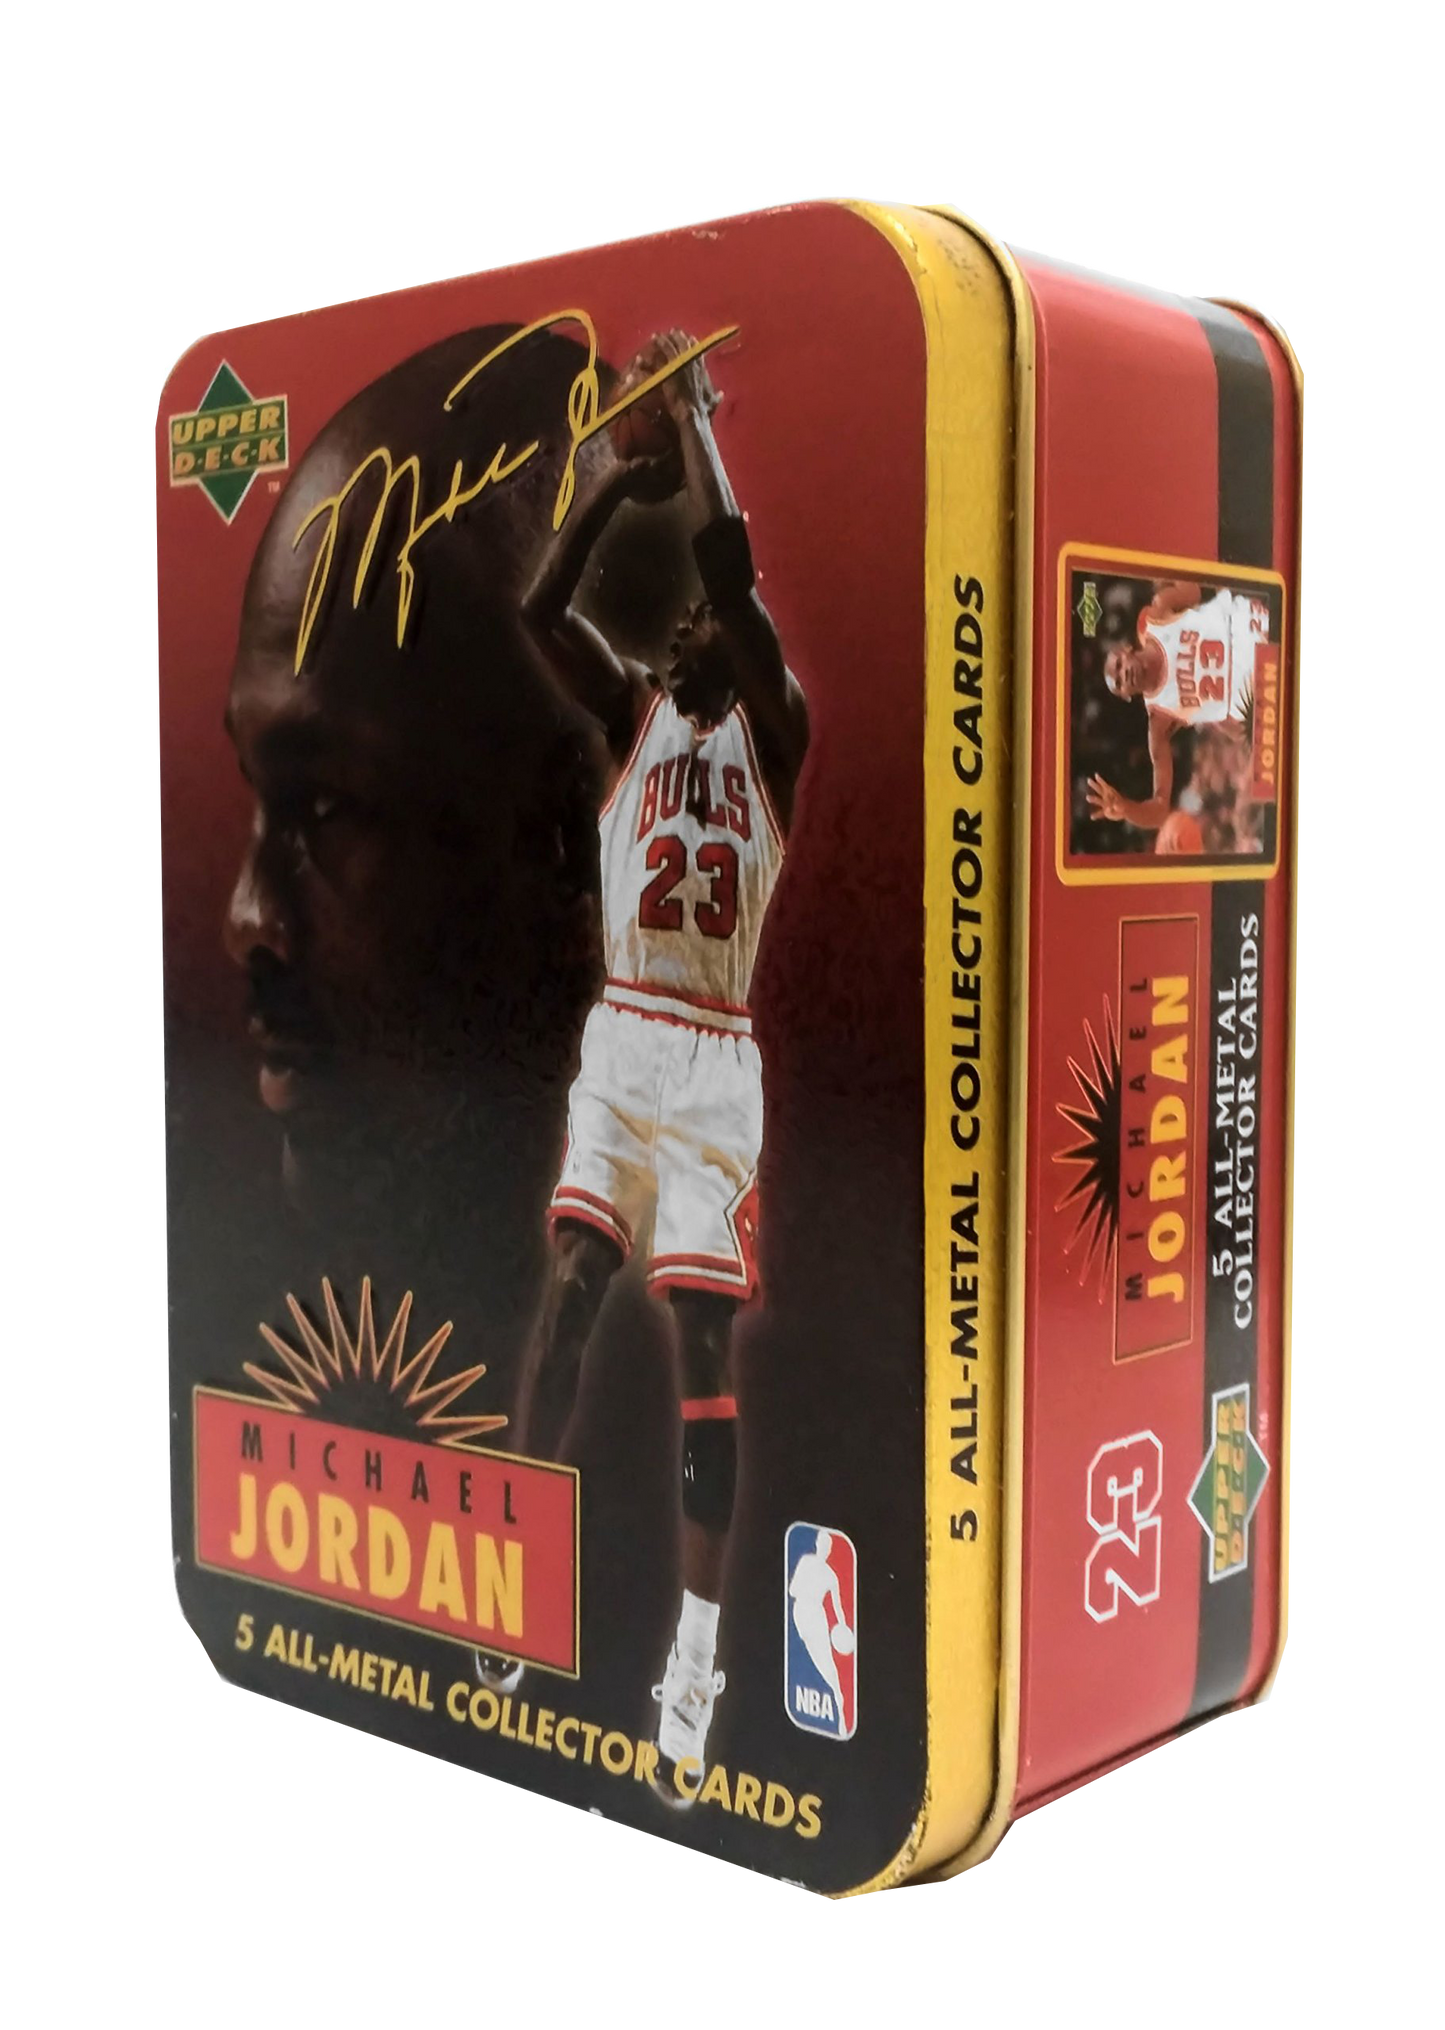 Upper Deck - Michael Jordan - 5 All-Metal Collector Cards